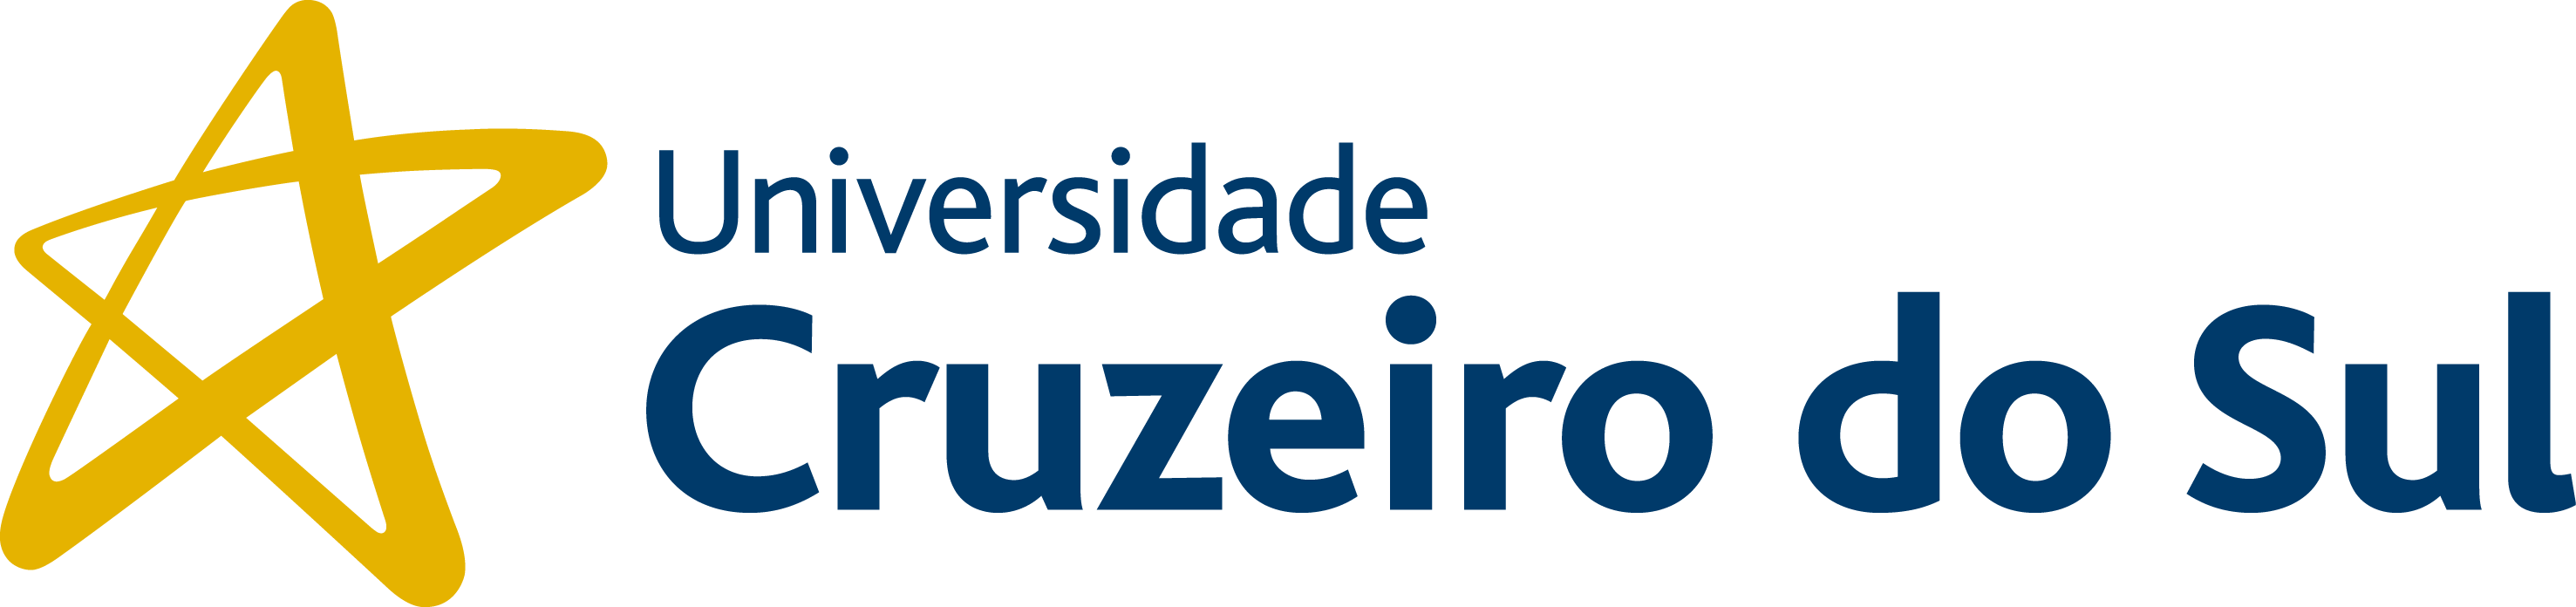 Universidade Cruzeiro do Sul - Campus Liberdade